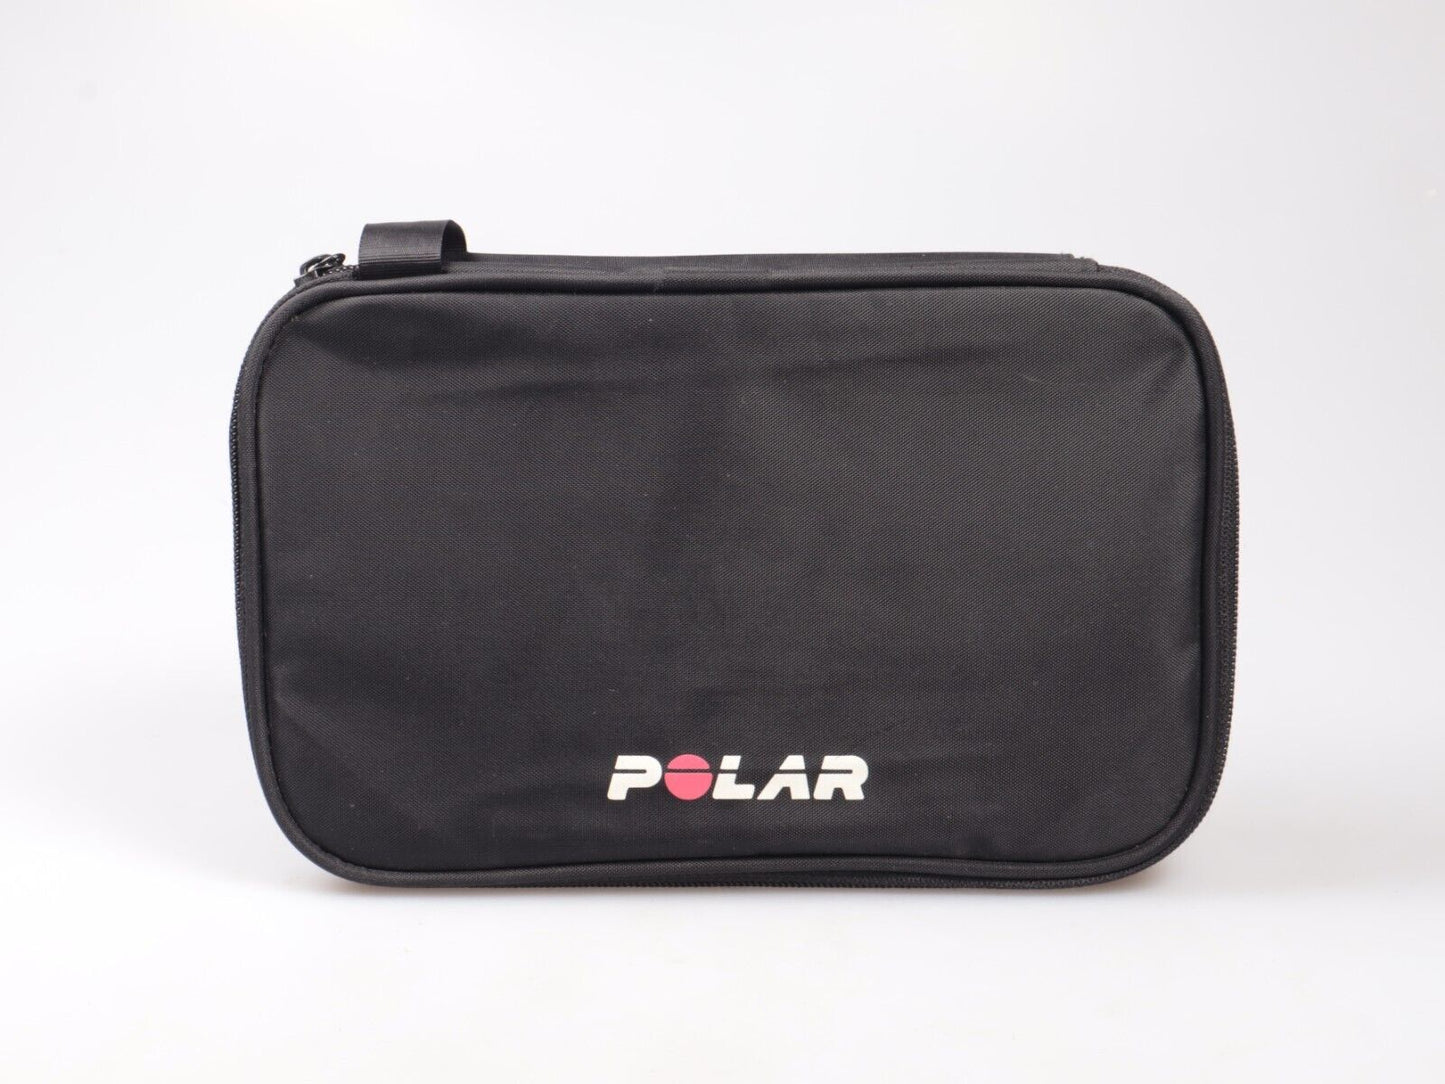 POLAR S625X Running Watch Hear Rate S1 foot Pod Wearlink